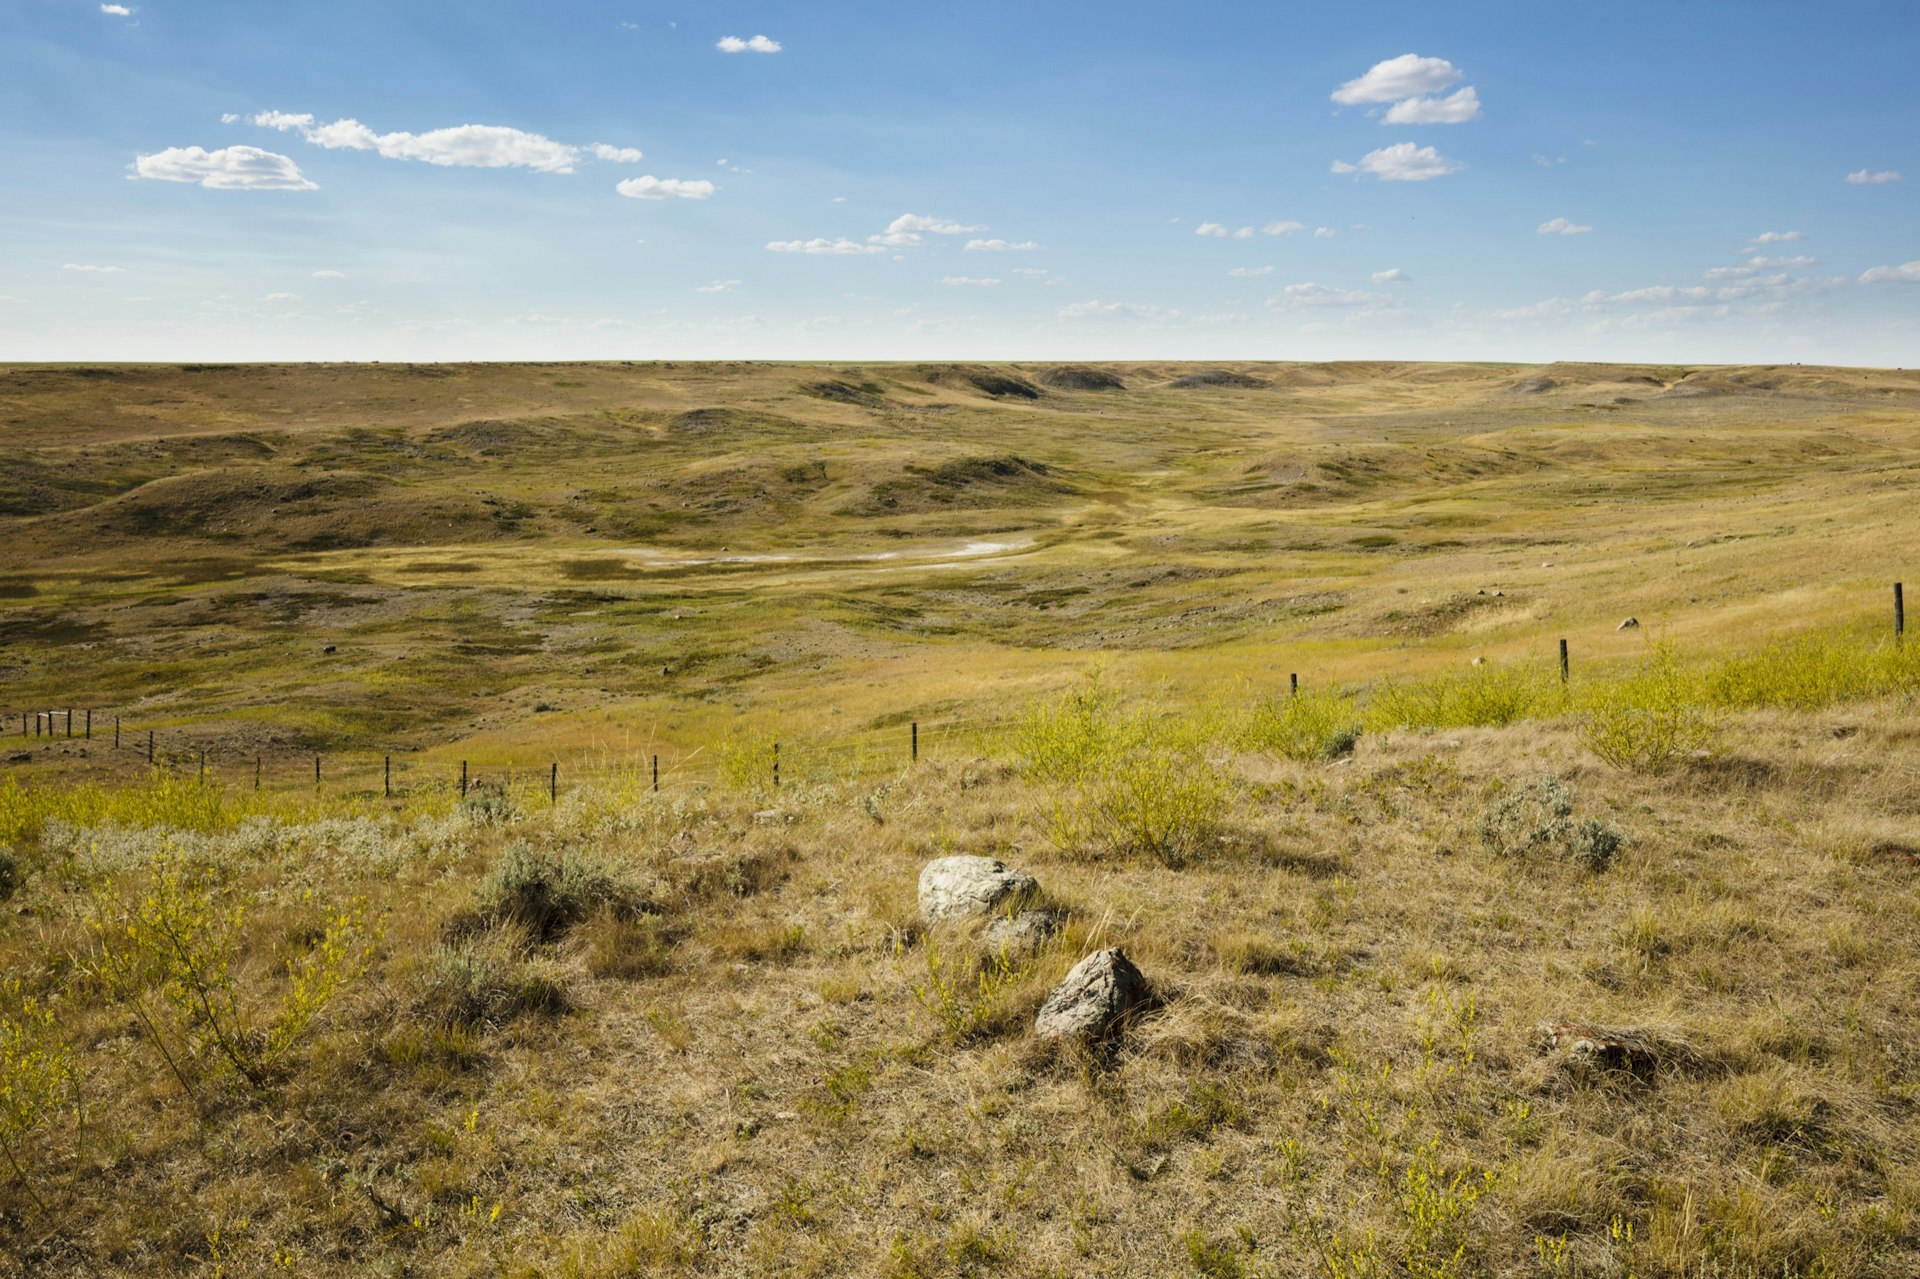 View of the open and vast grasslands region in southern Saskatchewan 